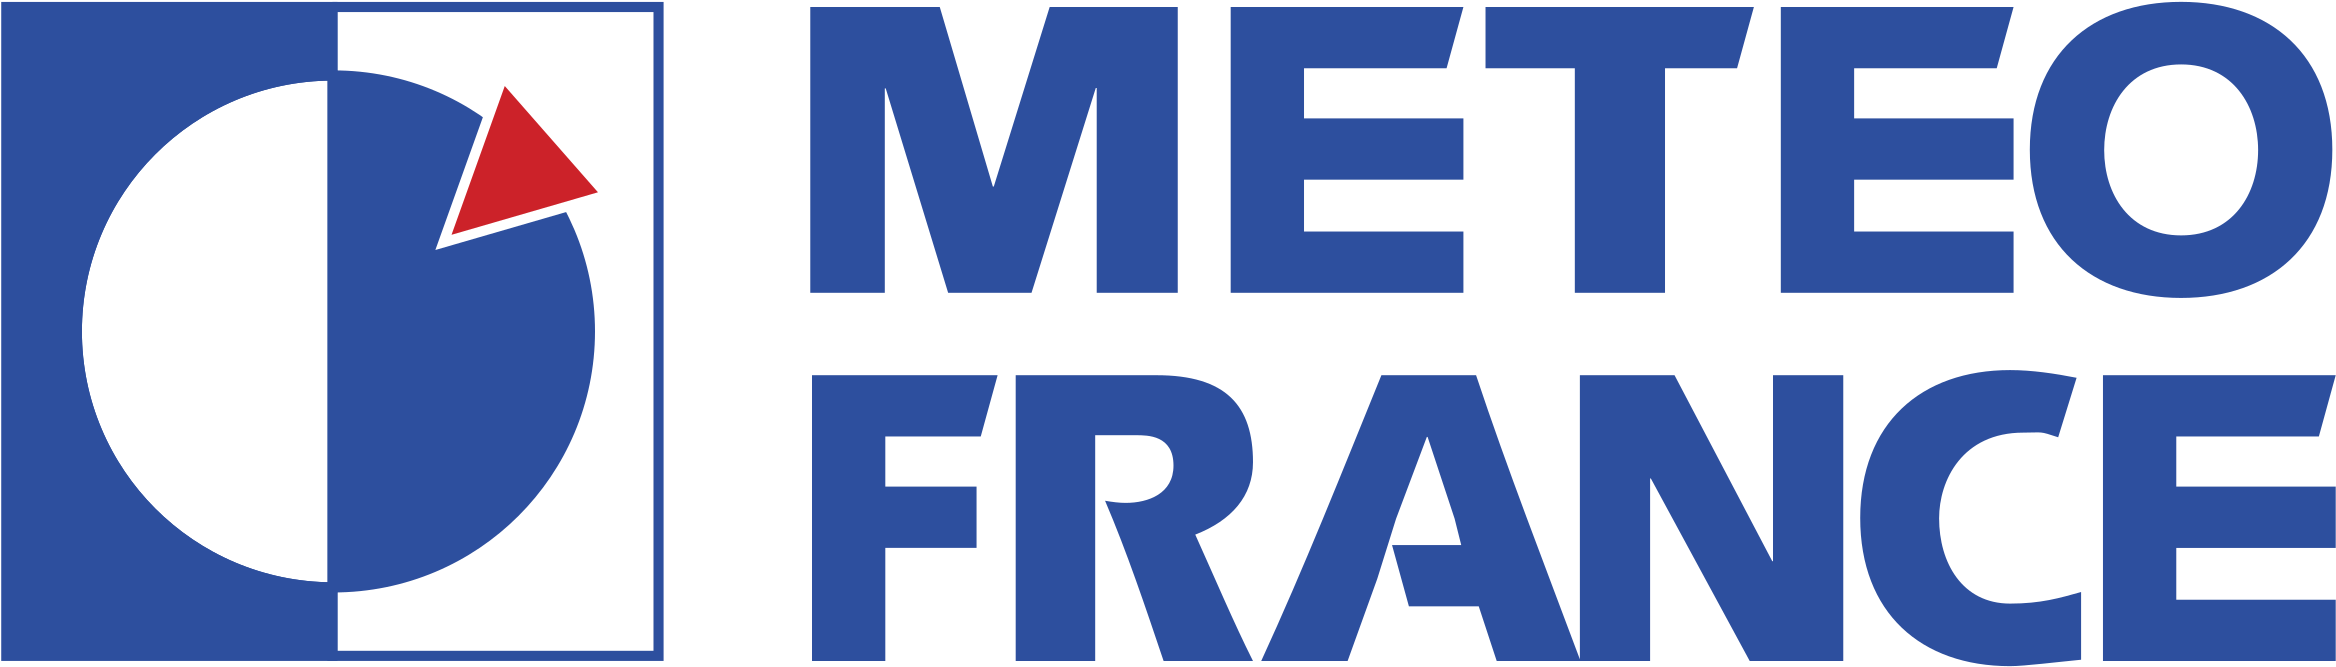 meteo-france-logo